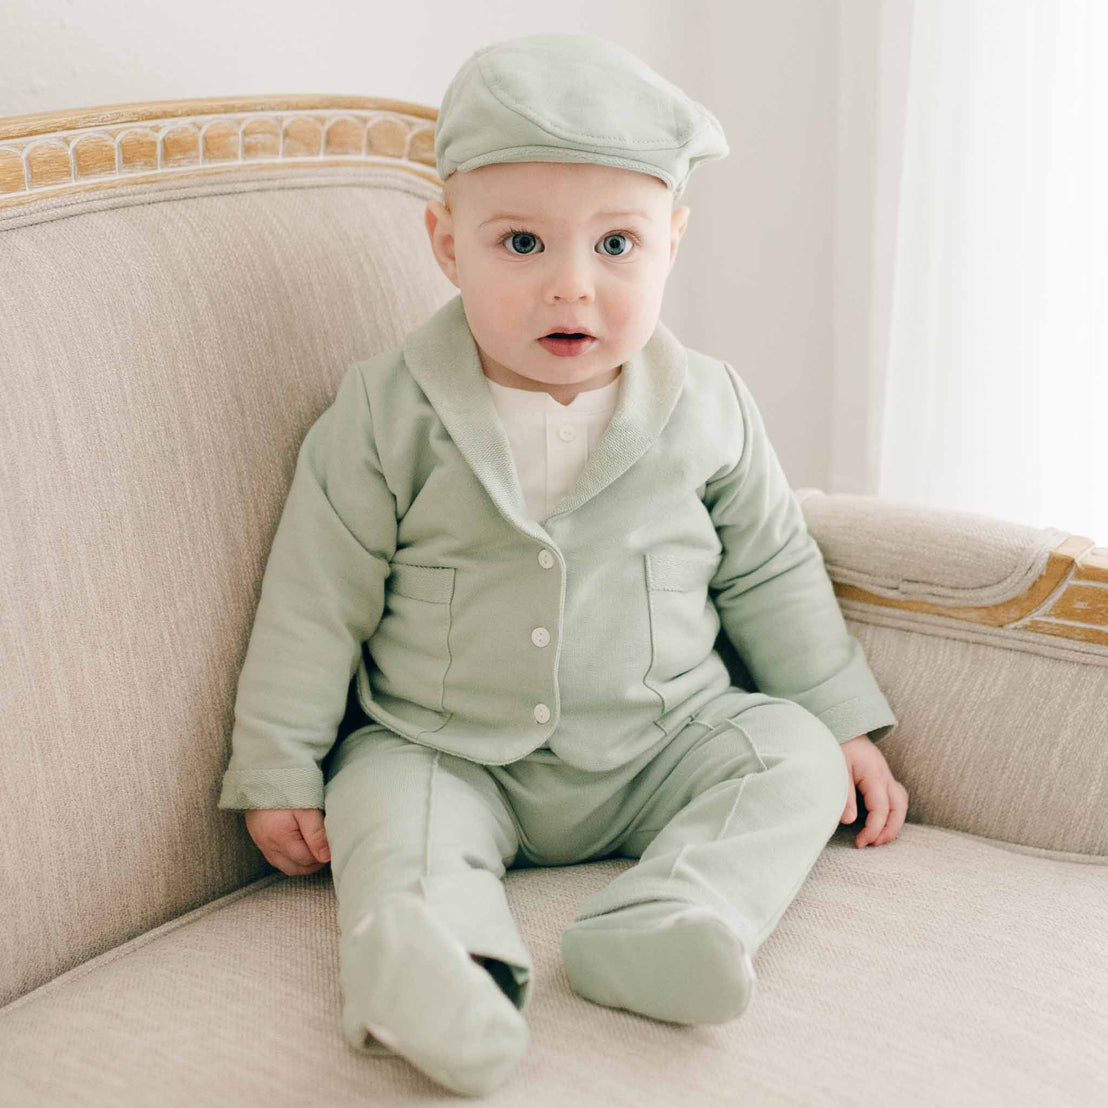 Baby boy sitting in Milo Sage suit